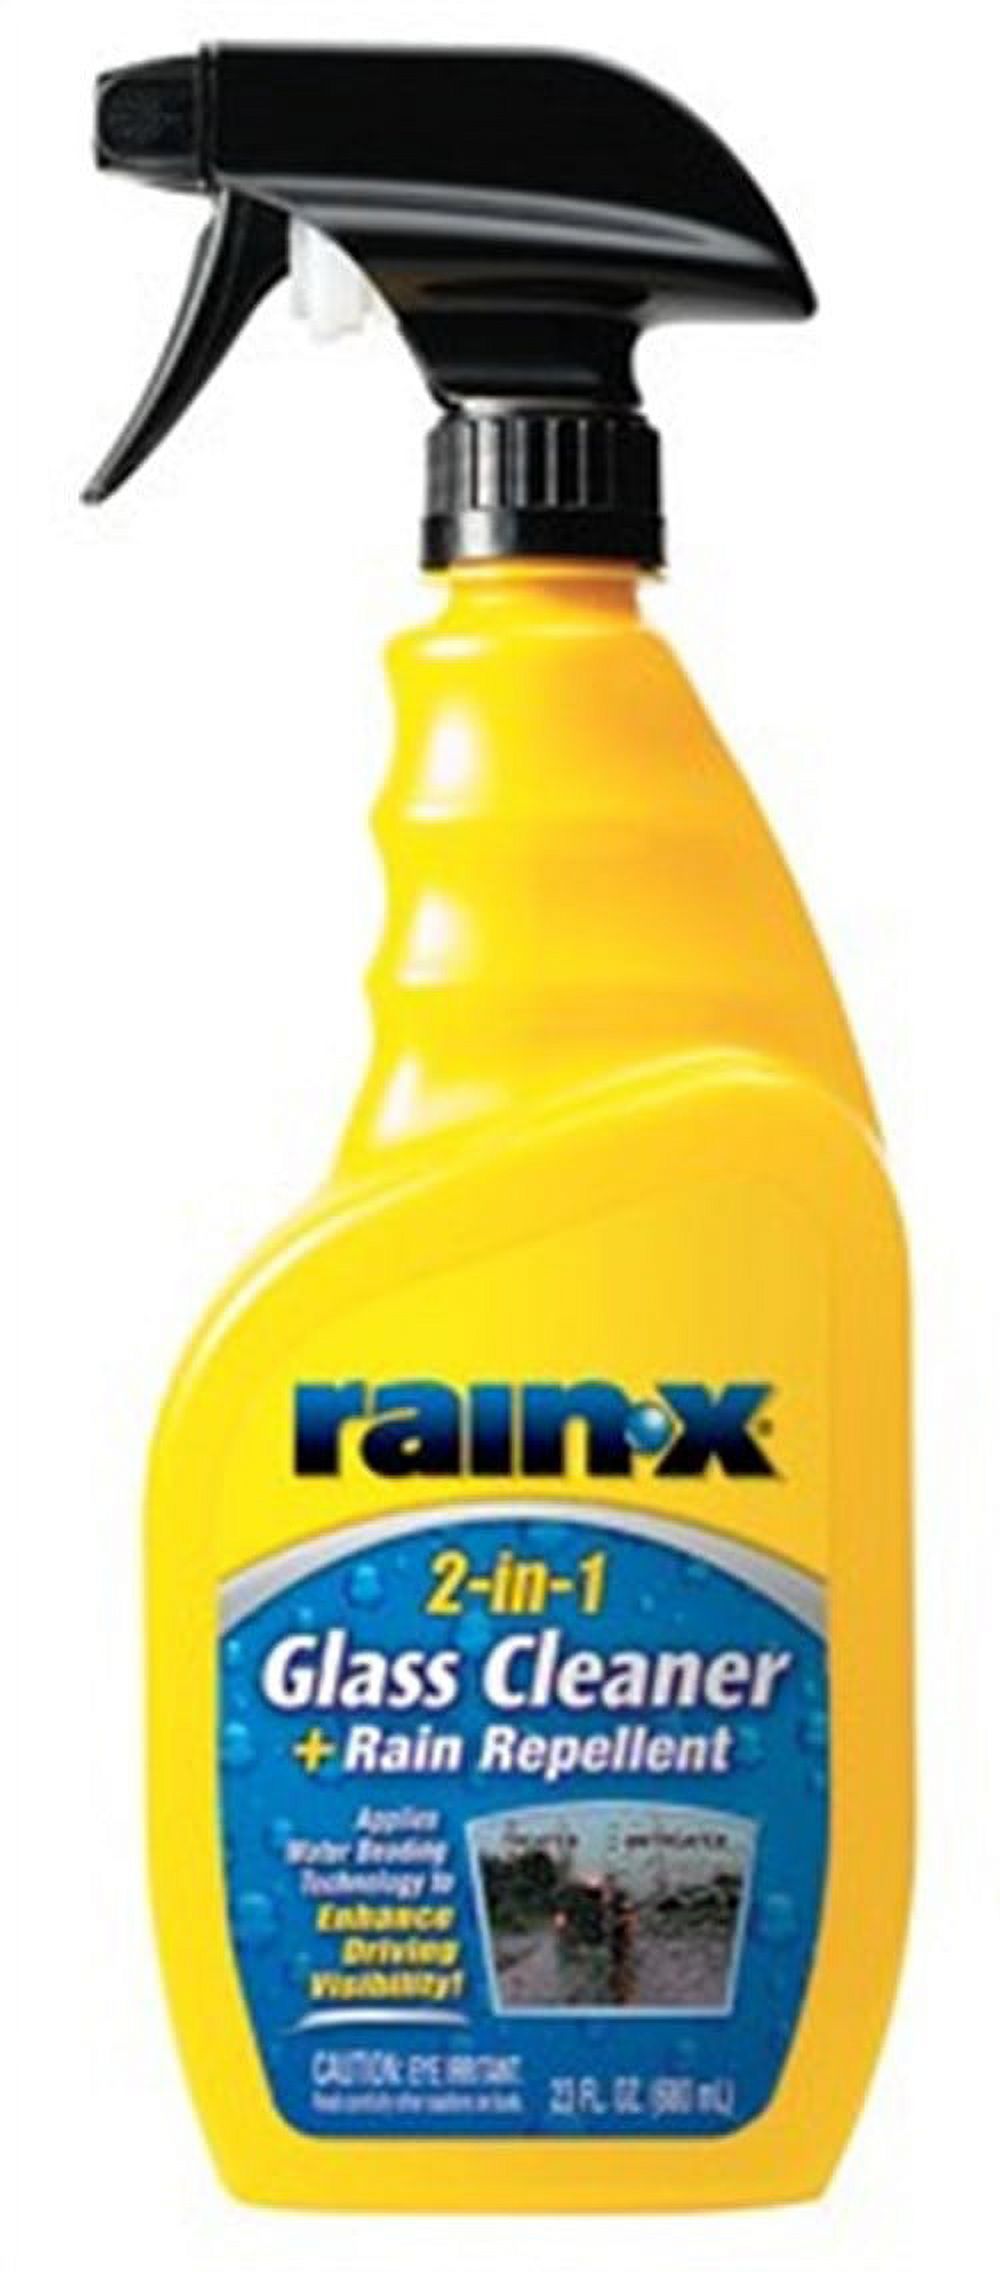 Rain-x Glass Cleaner + Rain Repellent, 23 oz - 5071268 - image 2 of 2